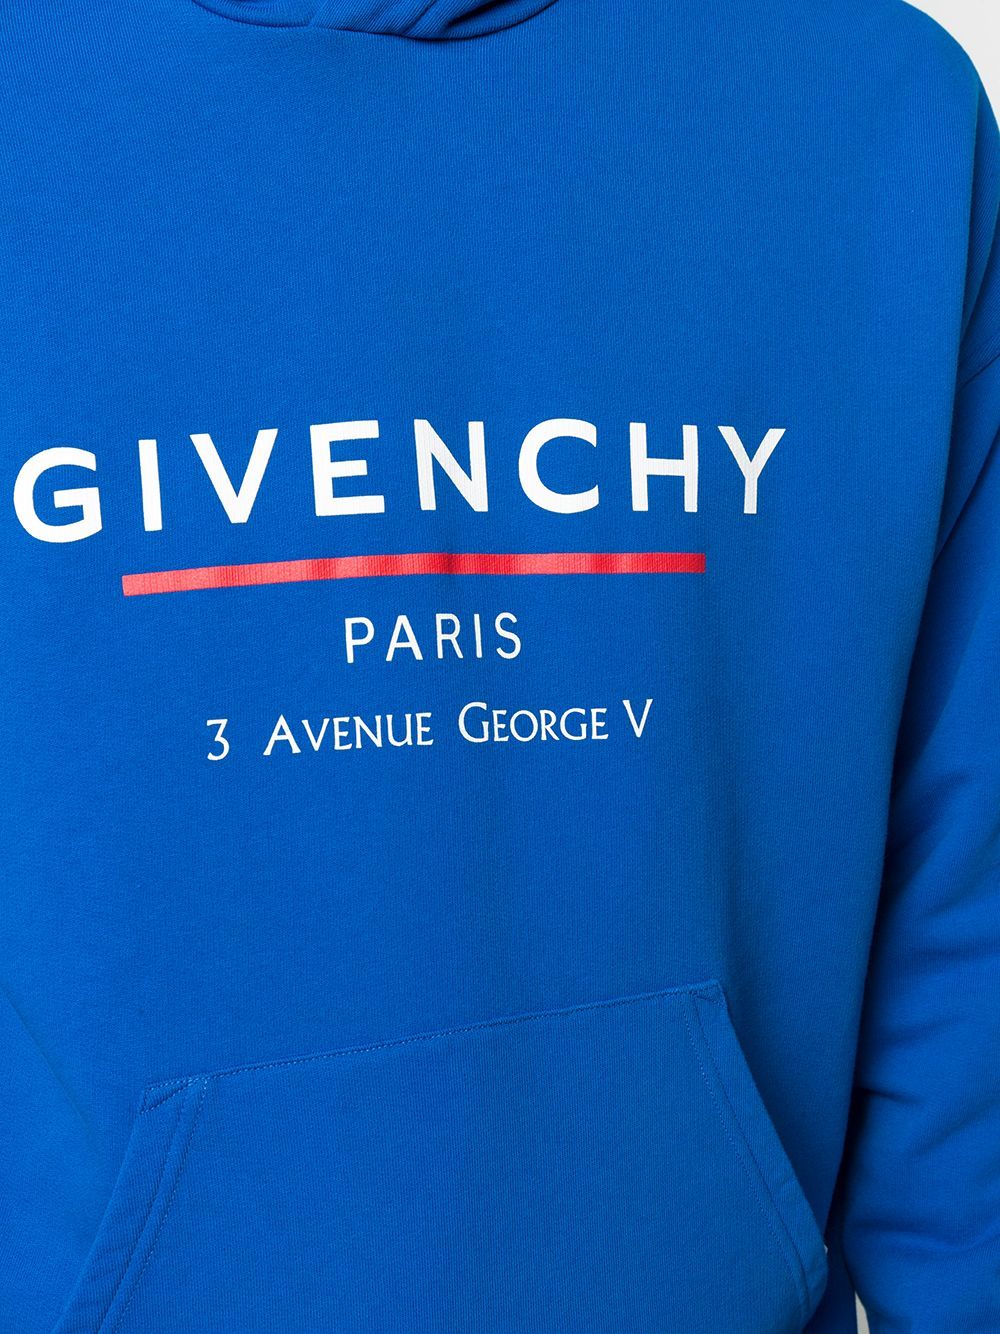 Givenchy Address Hooded Sweatshirt BMJ05430AFF426